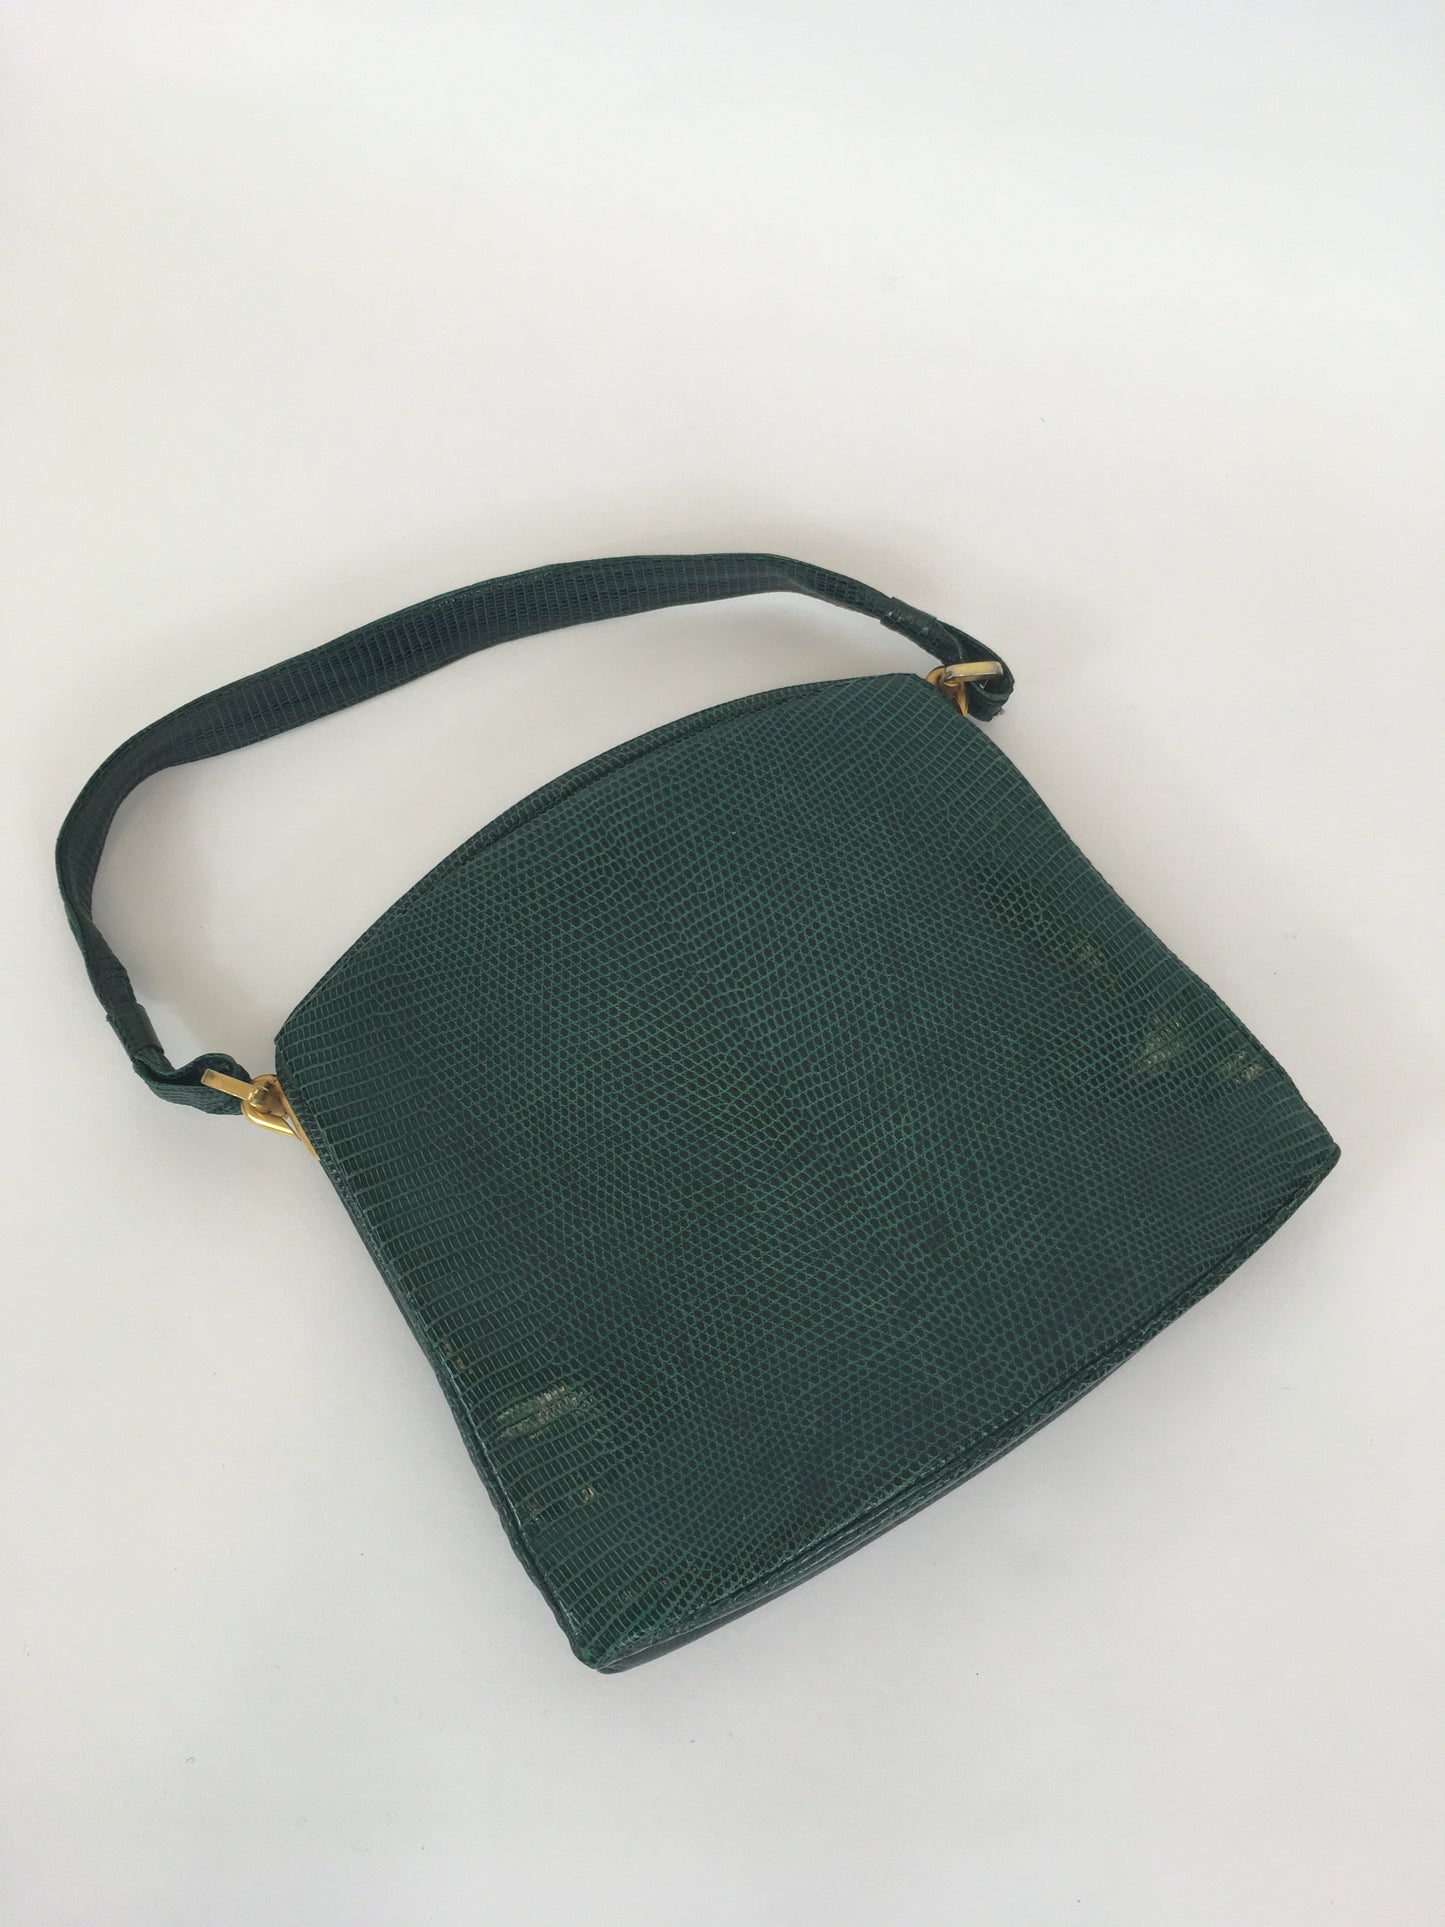 Original 1930’s Green Skin Handbag - In A Fabulous Art Deco Shape